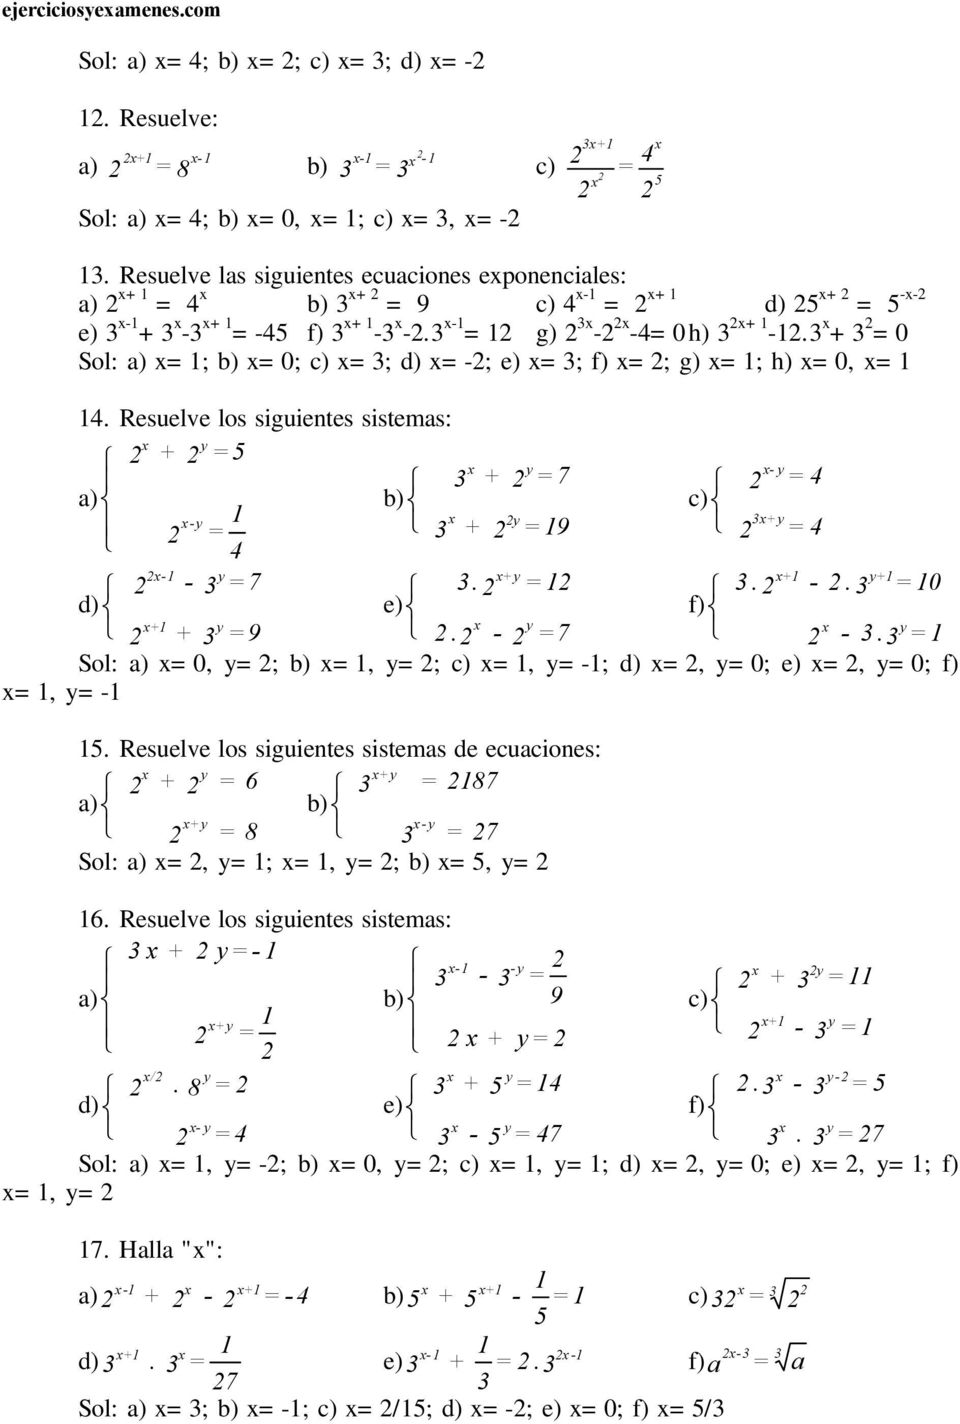 Resuelve los siguientes sistemas: - 7 b) - - - 7.. -. 0. - 7 -. Sol: a) 0, ; b), ;, -; d), 0; e), 0; f), -.